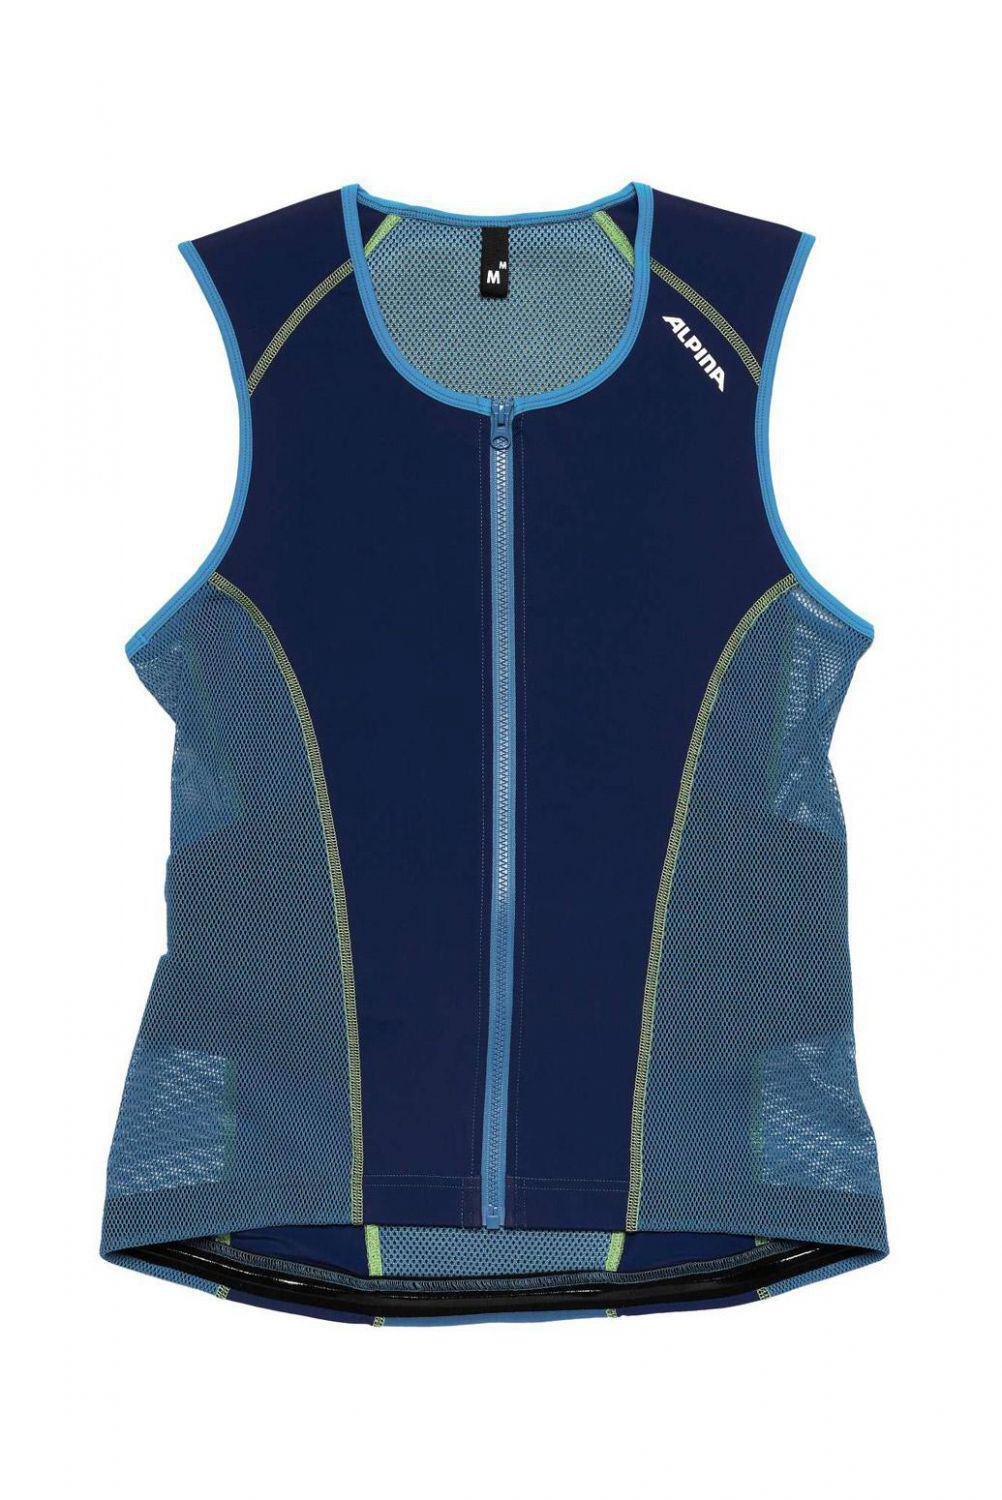 Alpina Jacket Soft Protector Men Vest (M = Körpergröße ca. 175-180 cm, 82 navy/green)